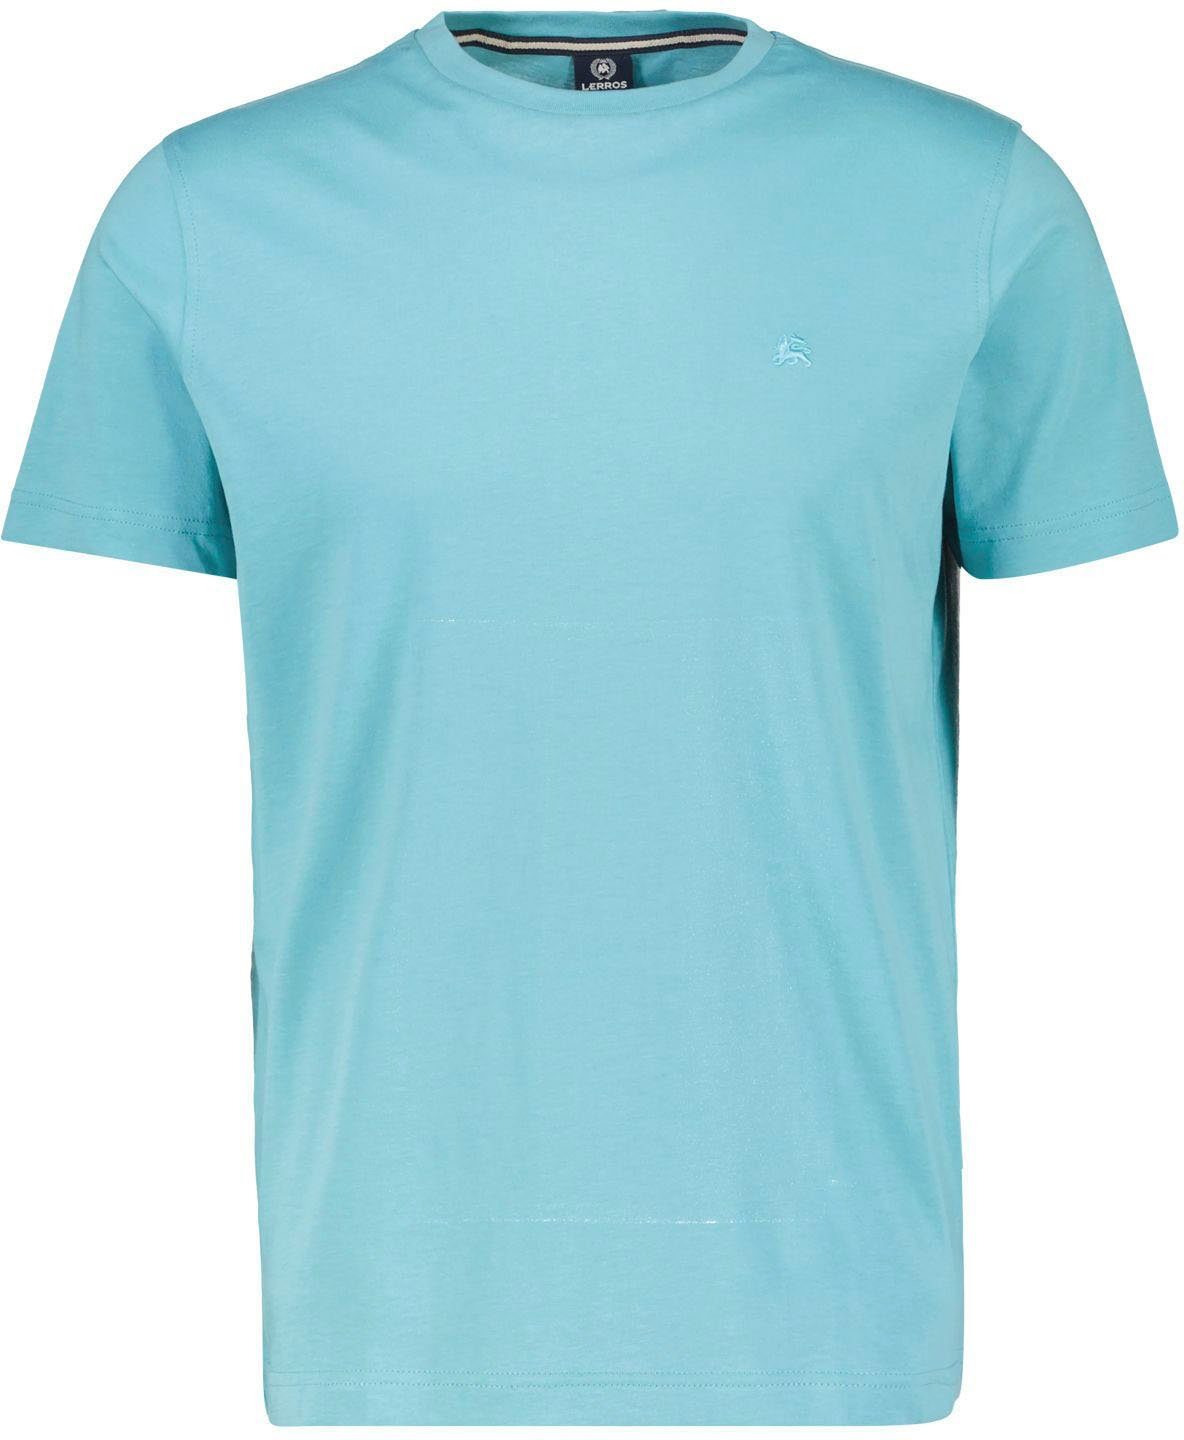 T-Shirt turquoise tonic im Basic-Look LERROS light